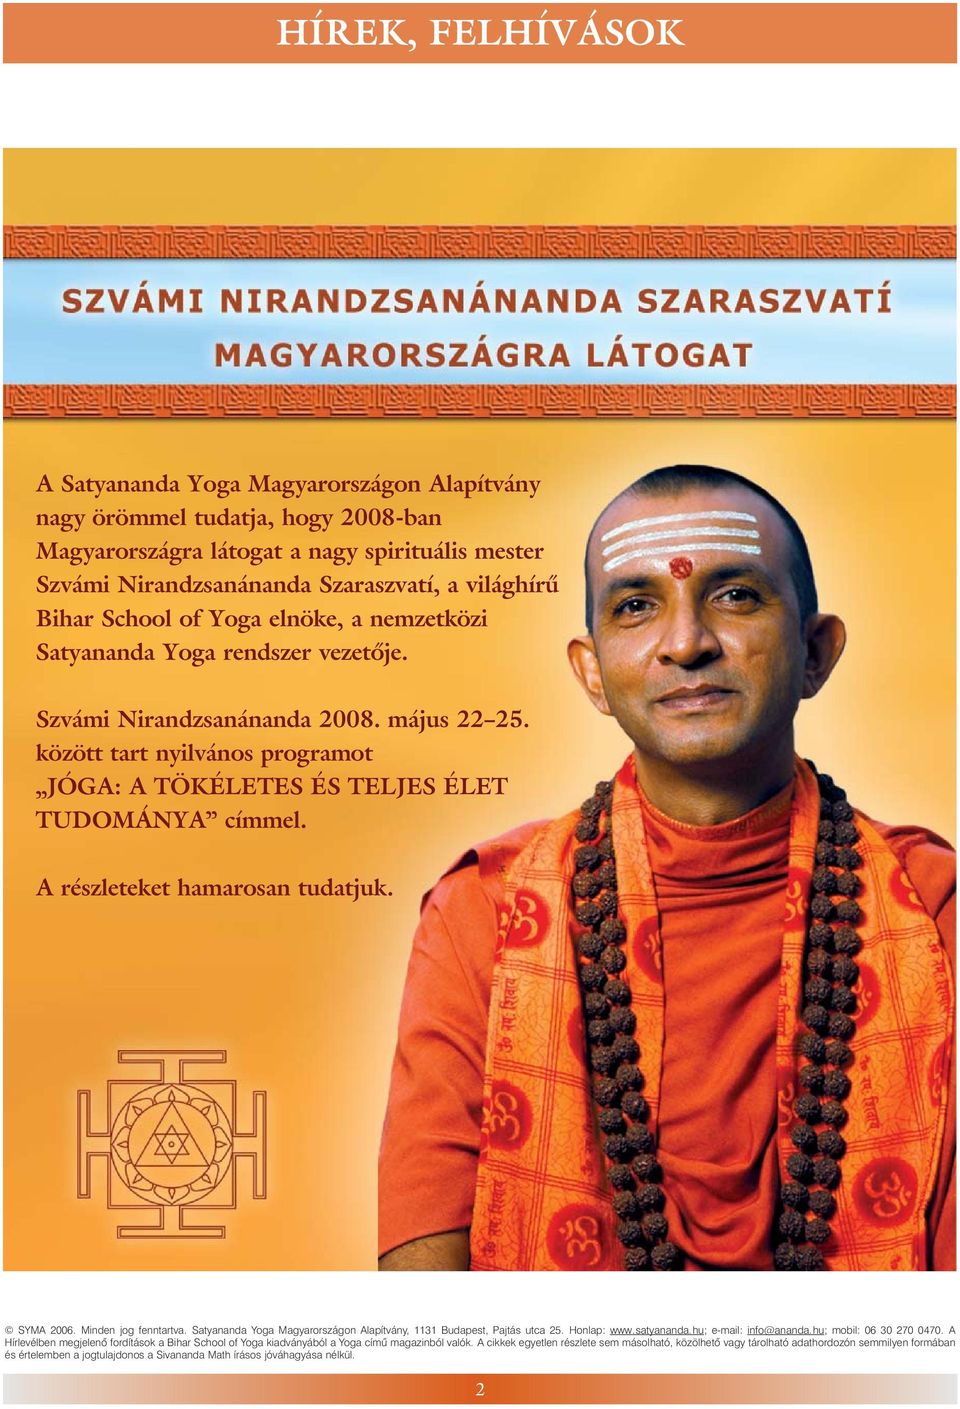 nö ke, a nem zet kö zi Satyananda Yoga rend szer ve ze tõ je. Szvámi Nirandzsanánanda 2008. má jus 22 25.